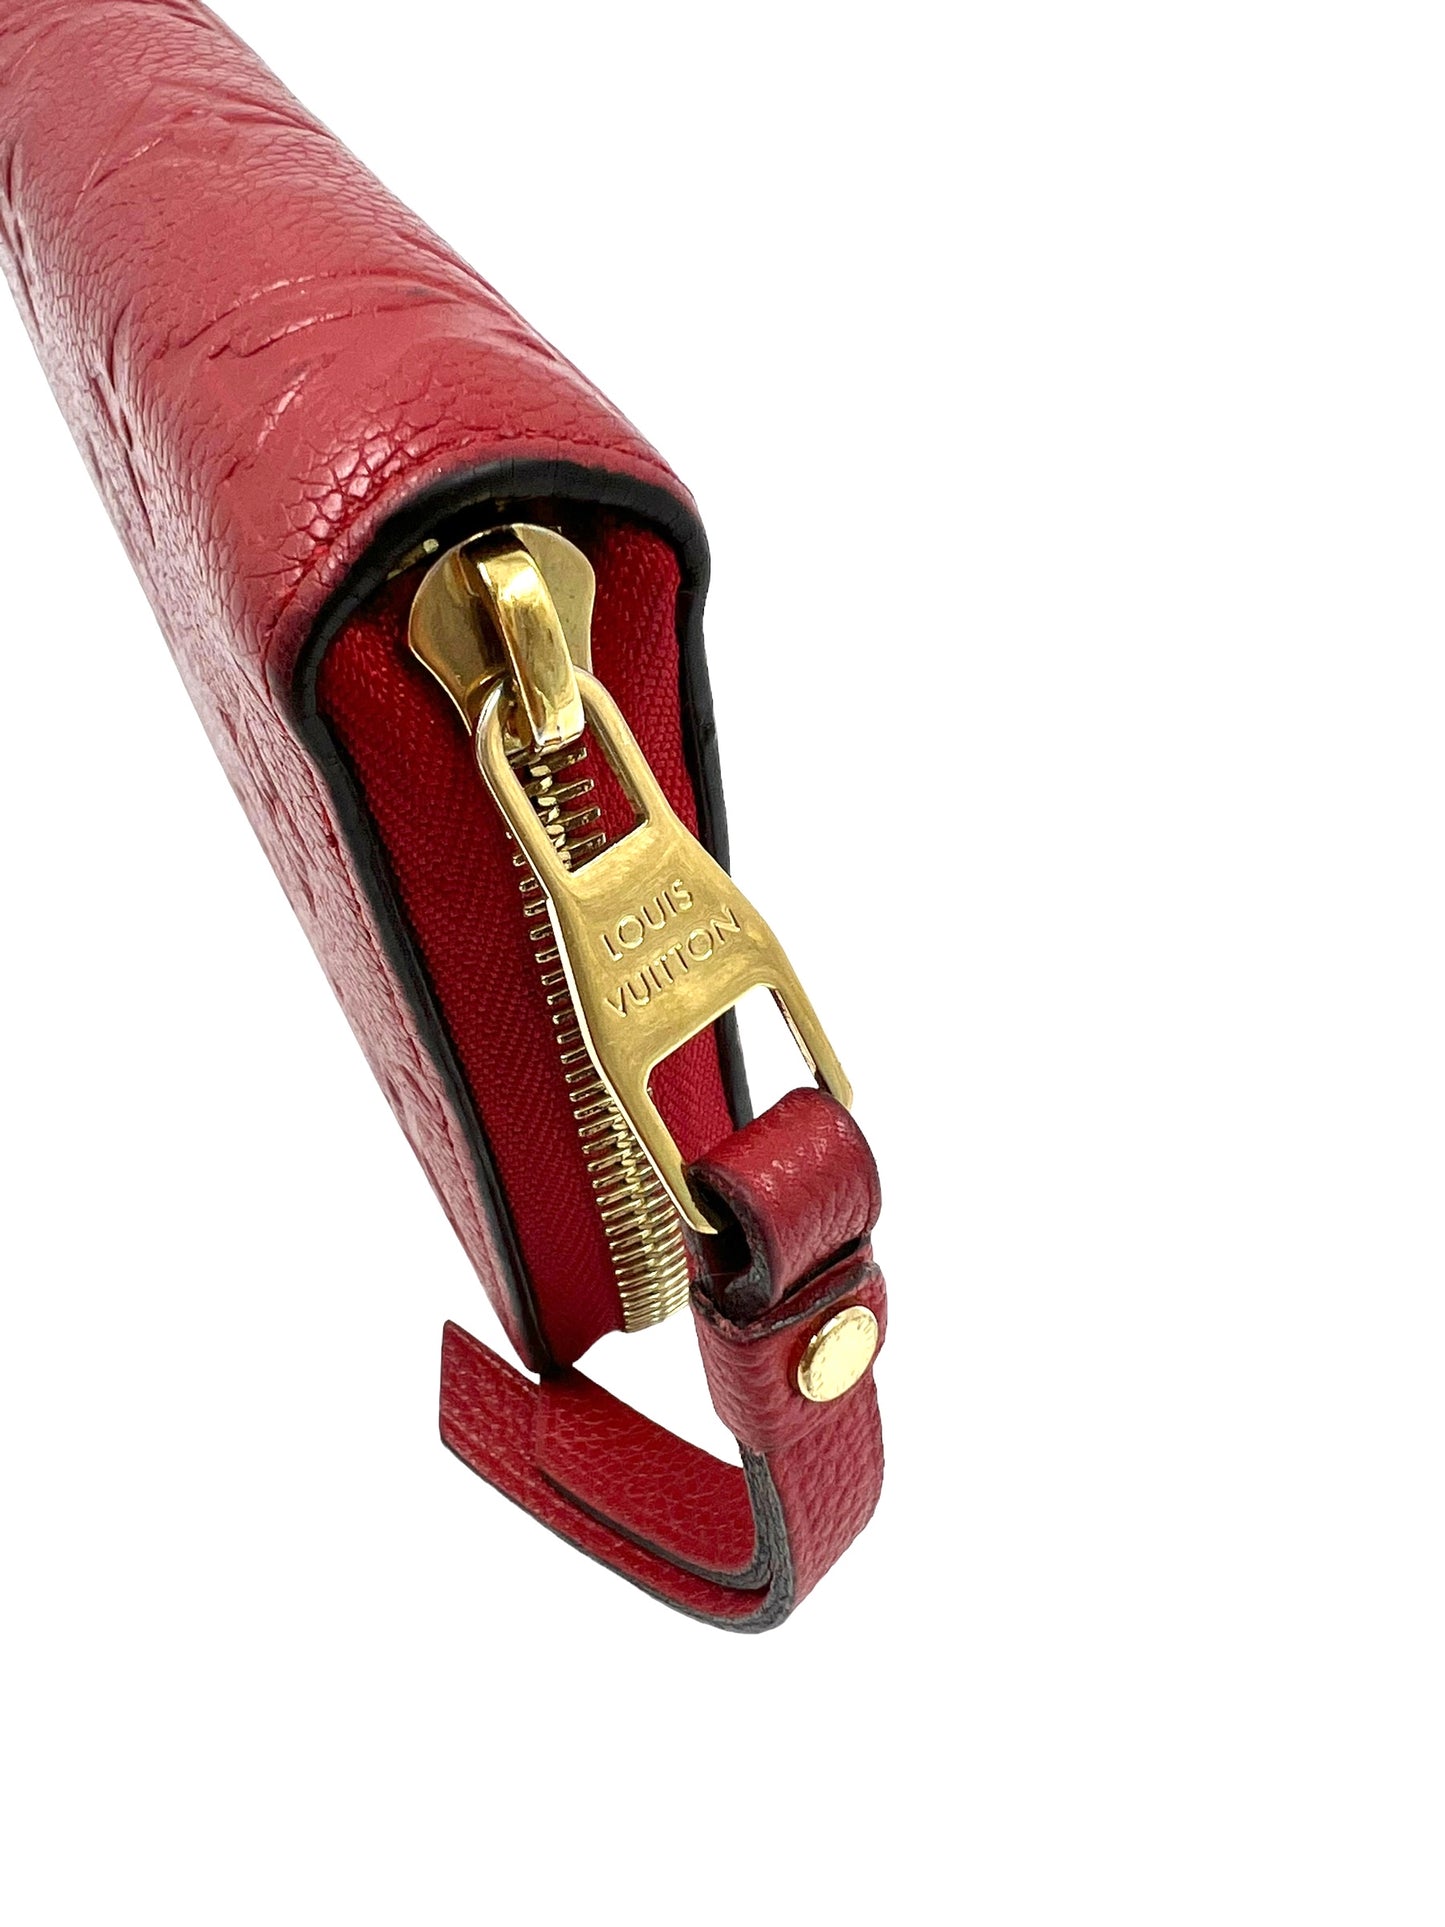 Louis Vuitton Red Empreinte Leather Zippy Wallet